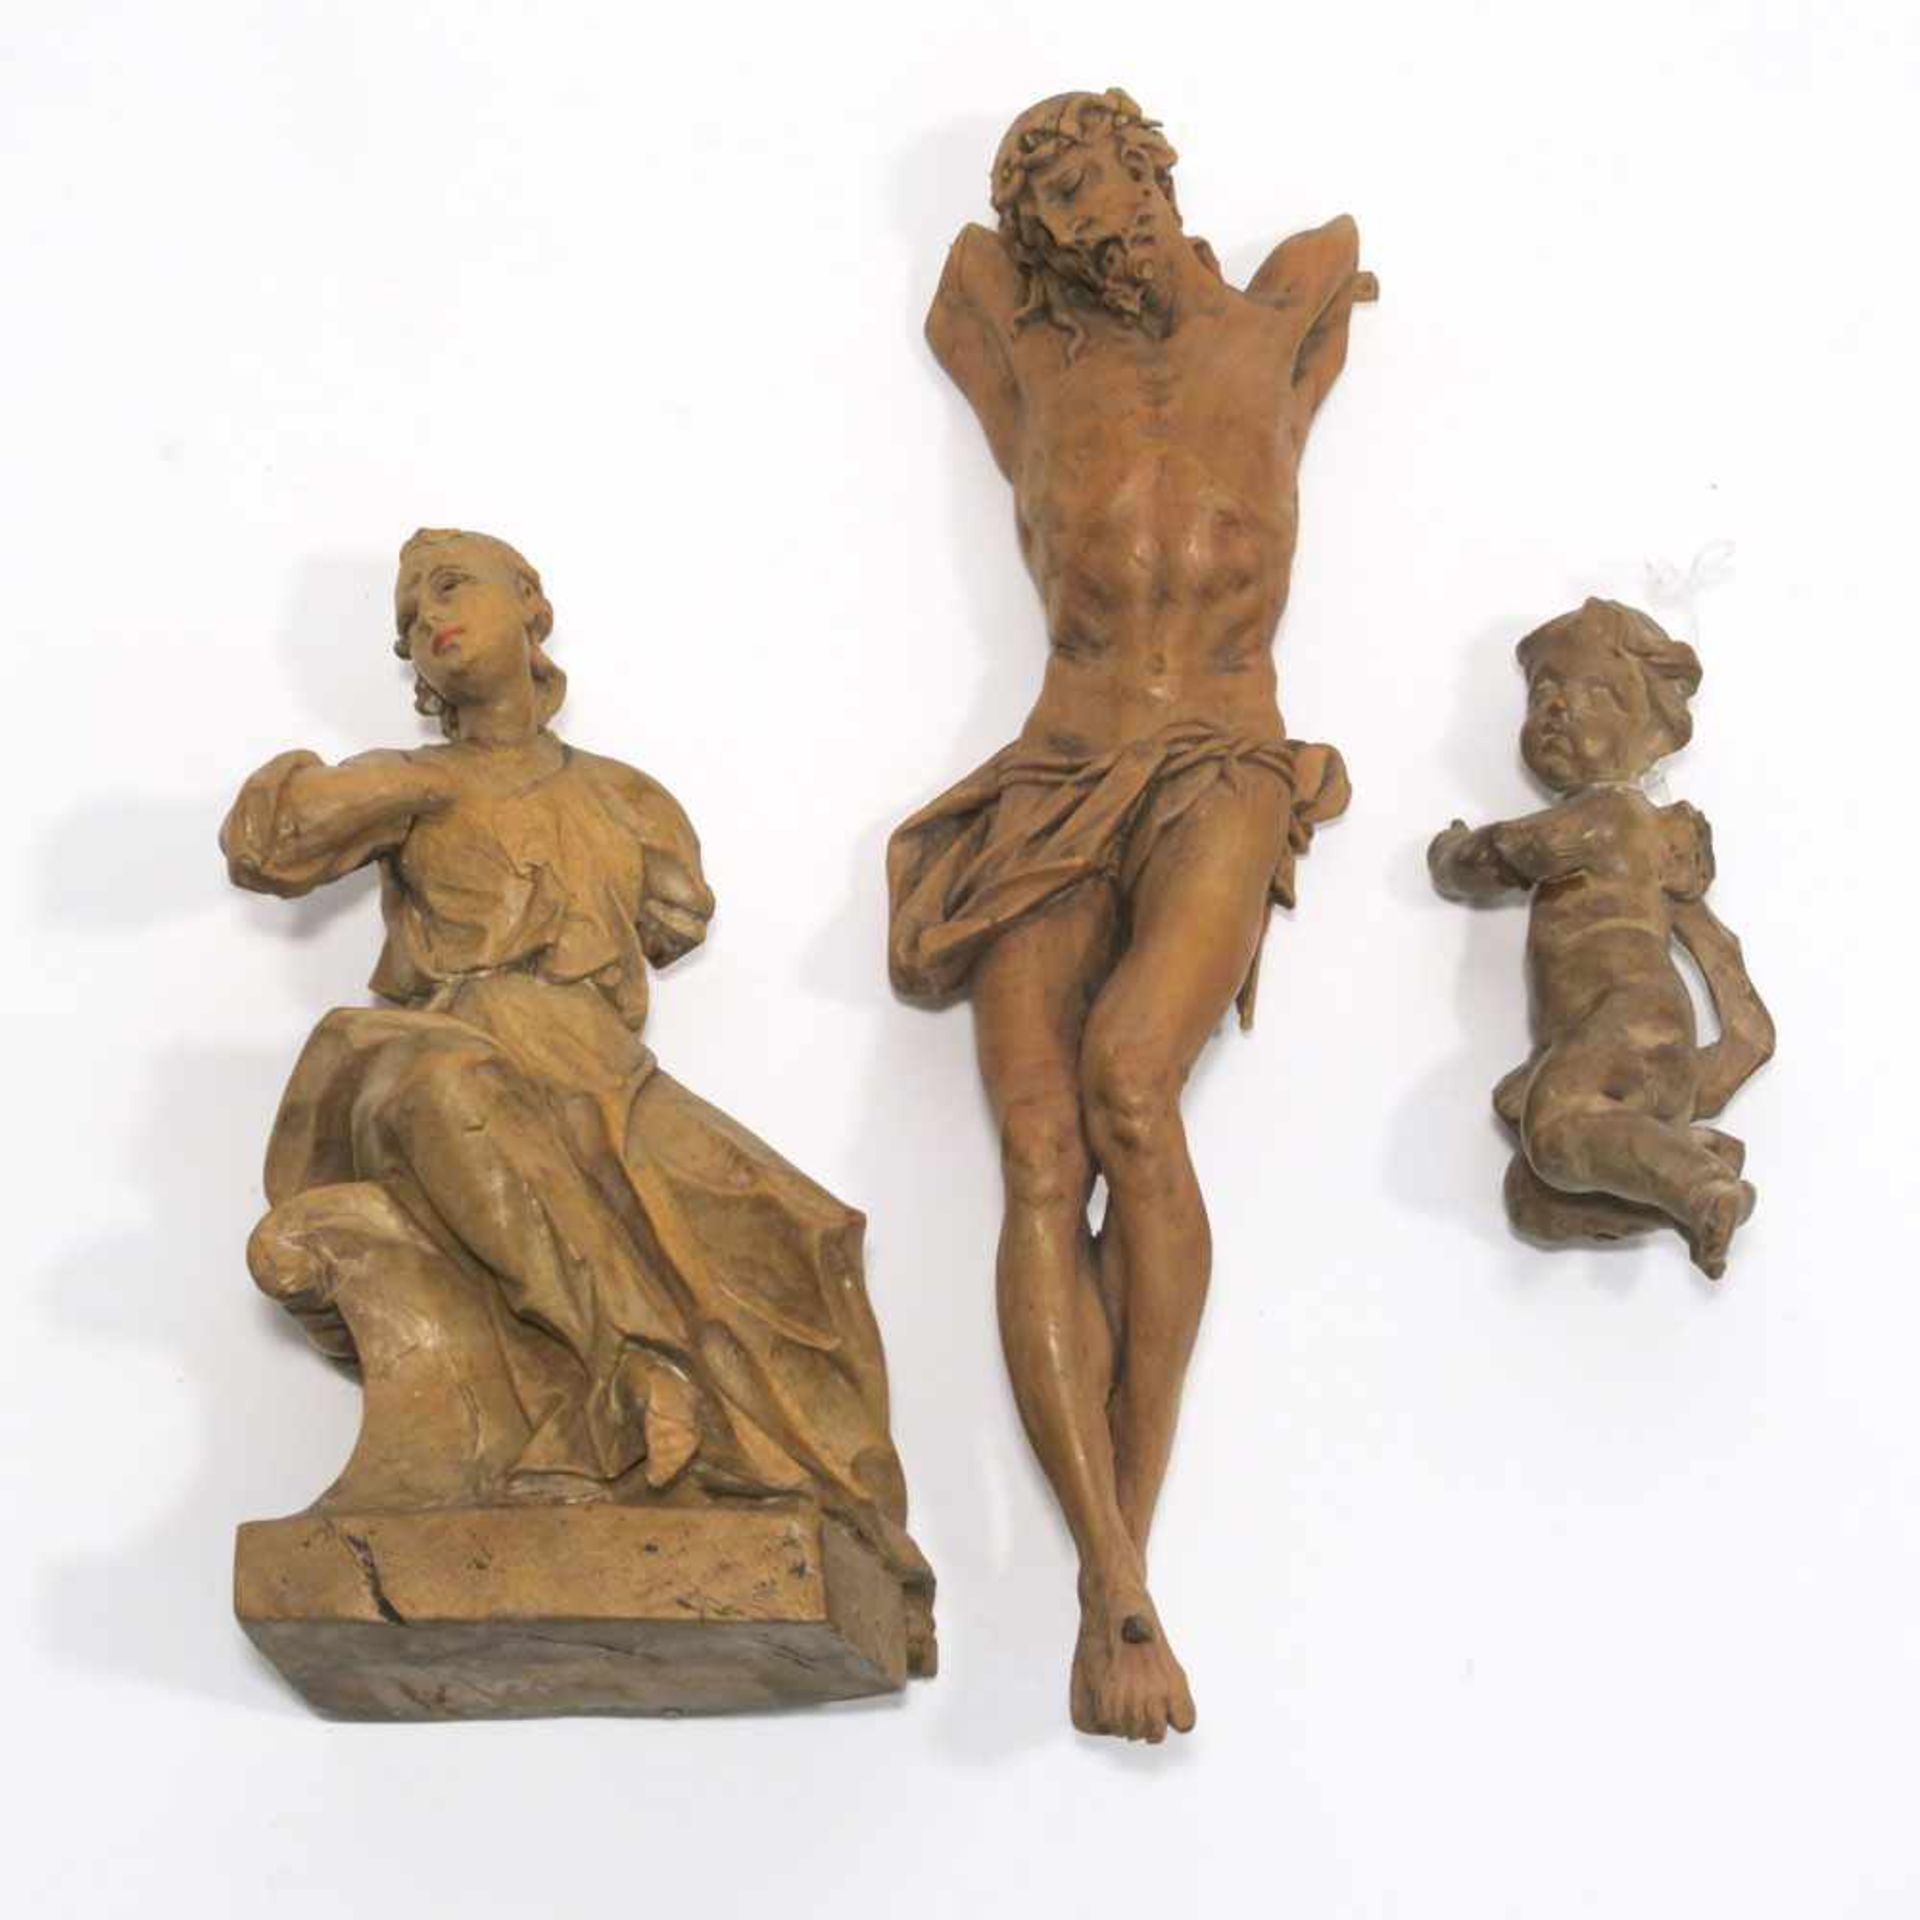 Christus-Korpus, Sitzende, Putto18. Jh. Holz, geschnitzt. Tlw. rest., besch. H. 8,5 cm bis 17,5 cm.-